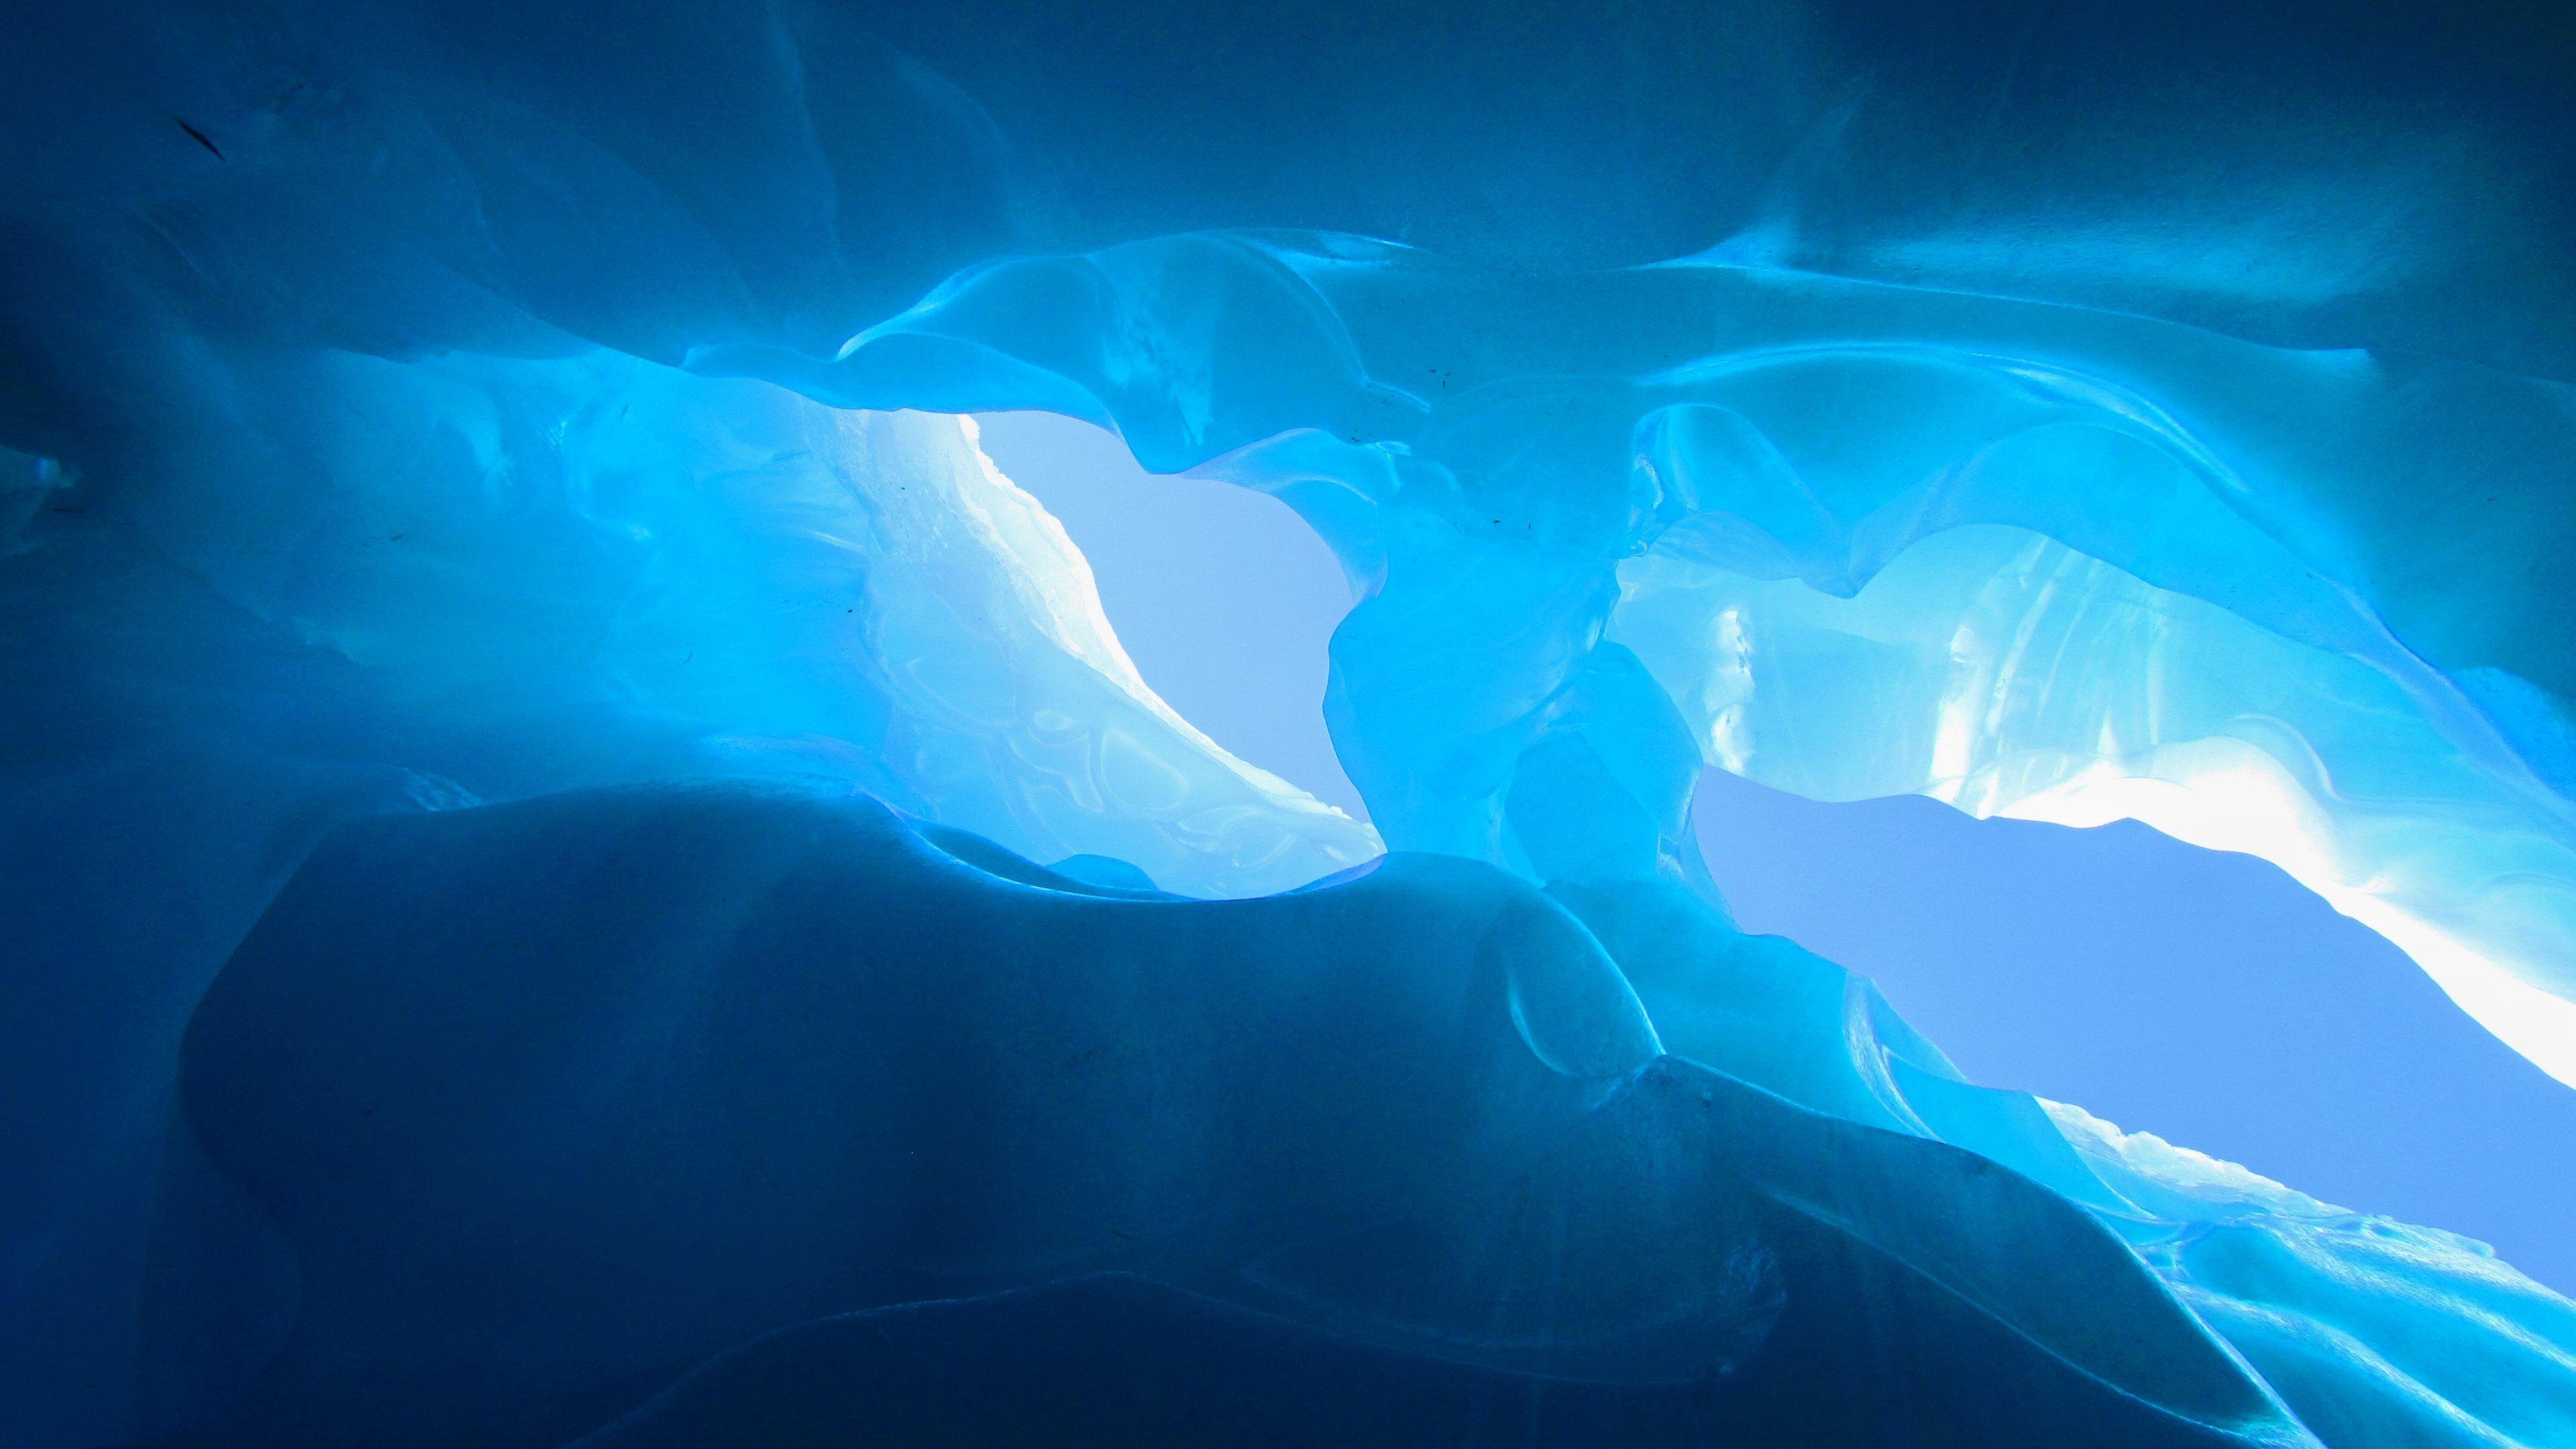 Melting Crystal ice 4K wallpaper download